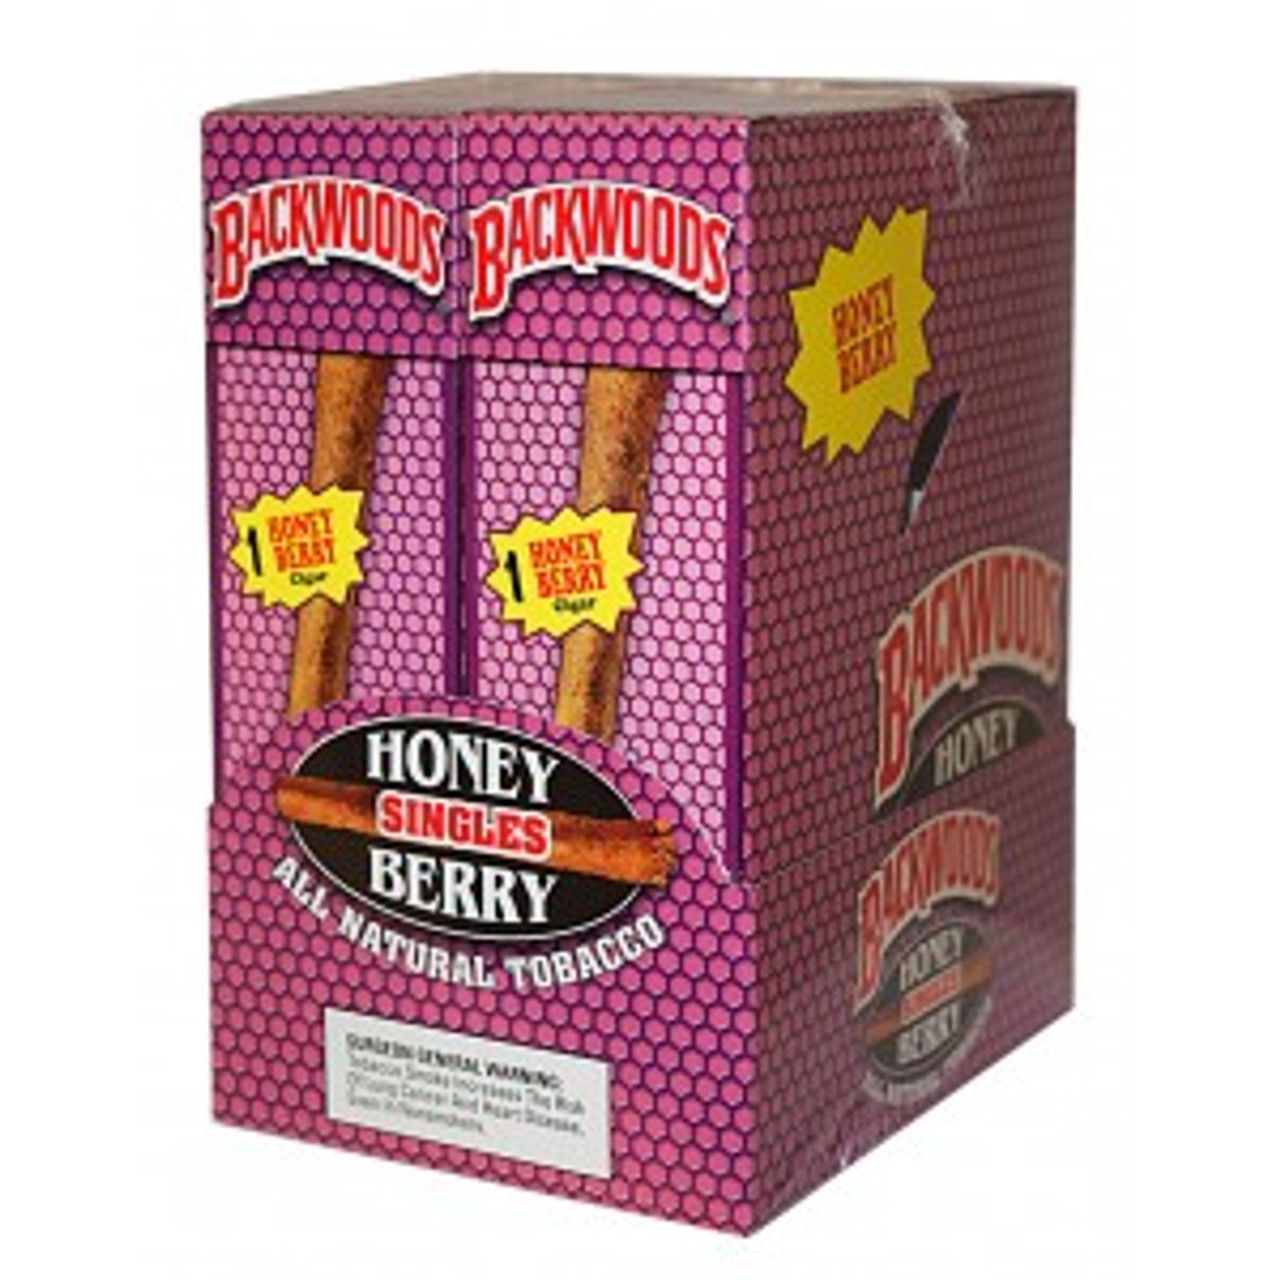 Backwoods Honey Berry Cigars, Cigars